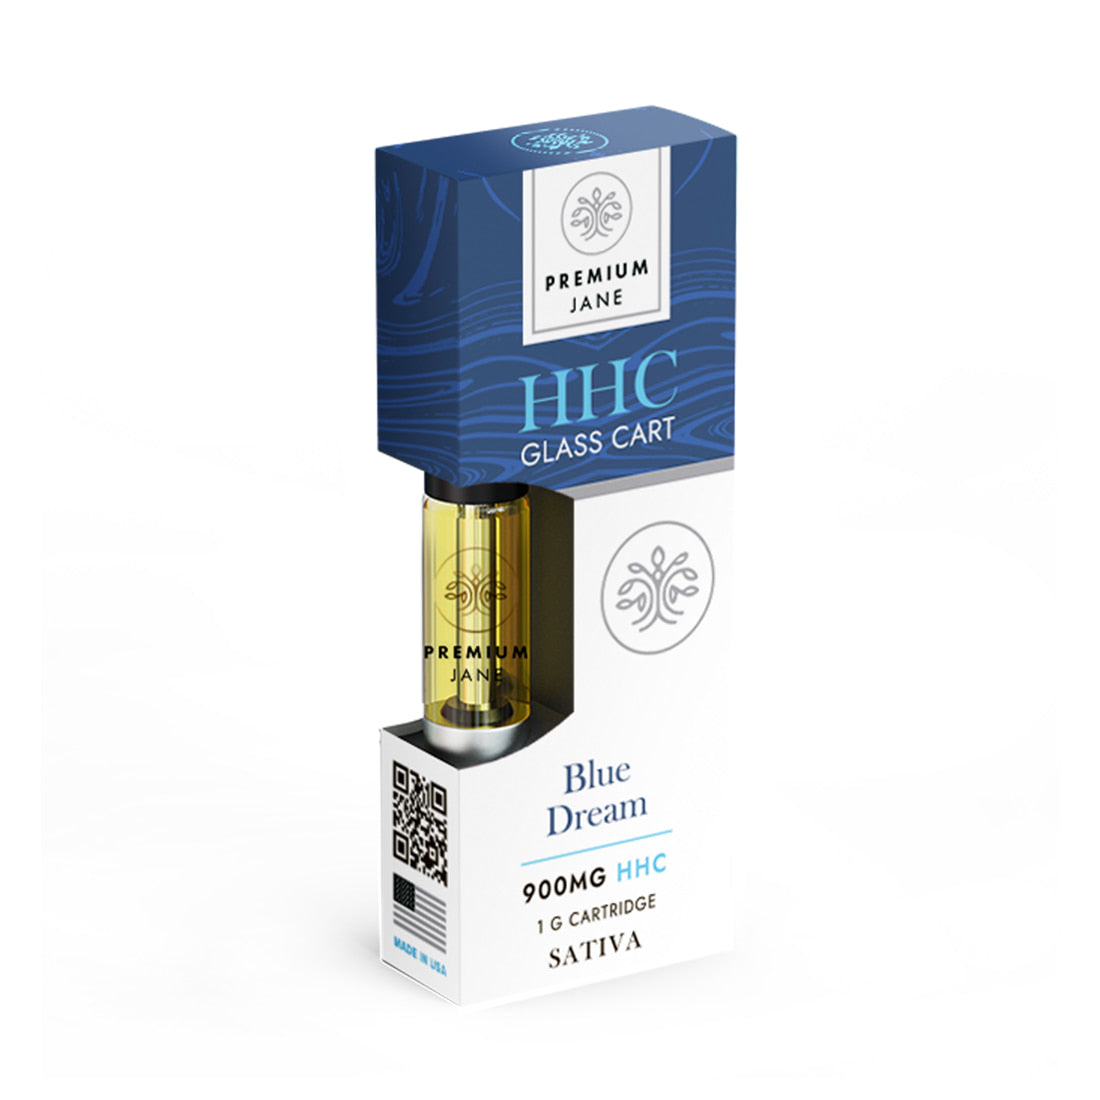 Premium Jane HHC Vape Cartridge Blue Dream – 900mg Best Price